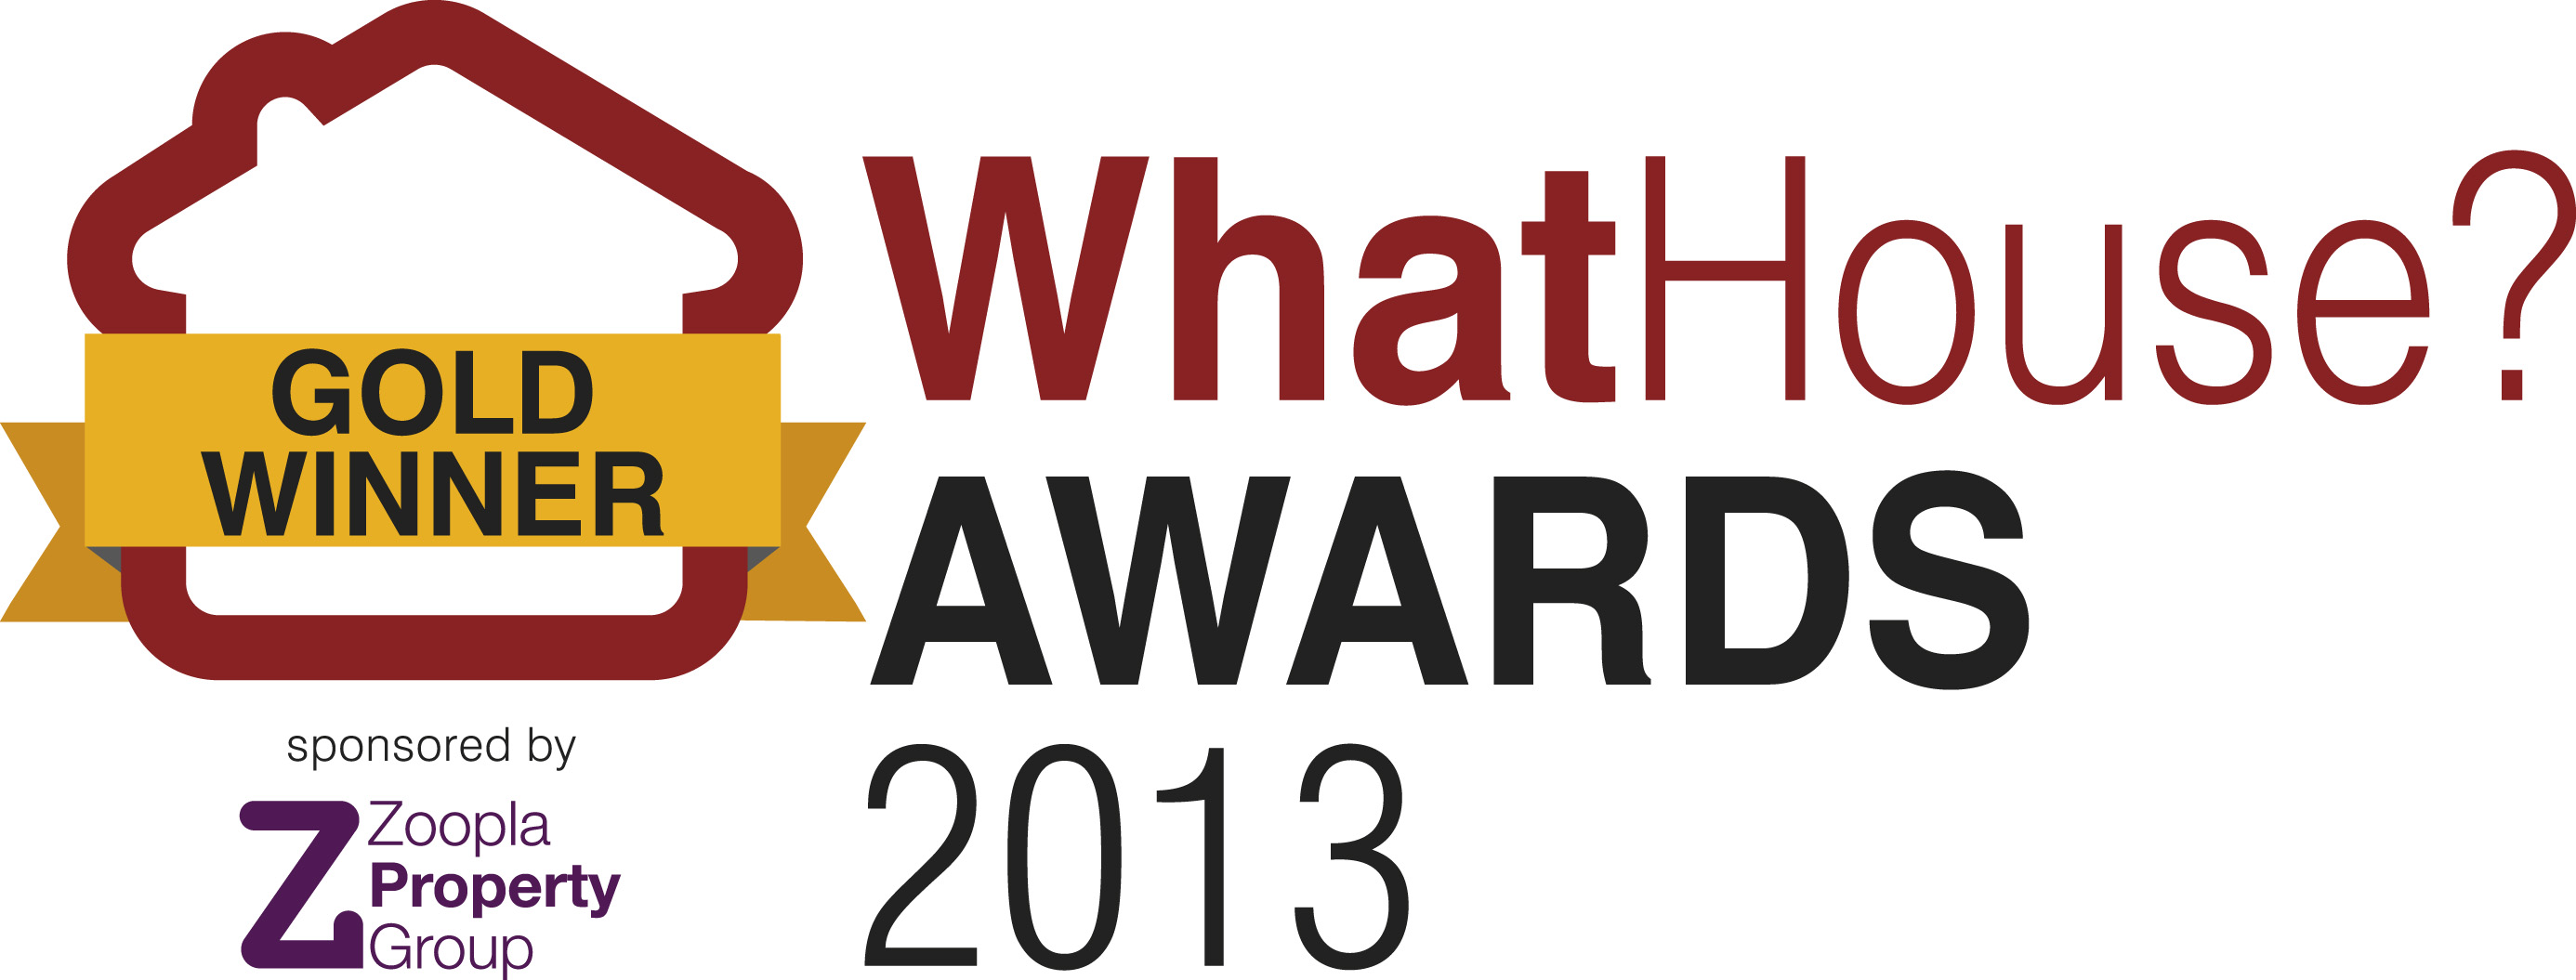 WhatHouse? Awards Winner Gold 2013